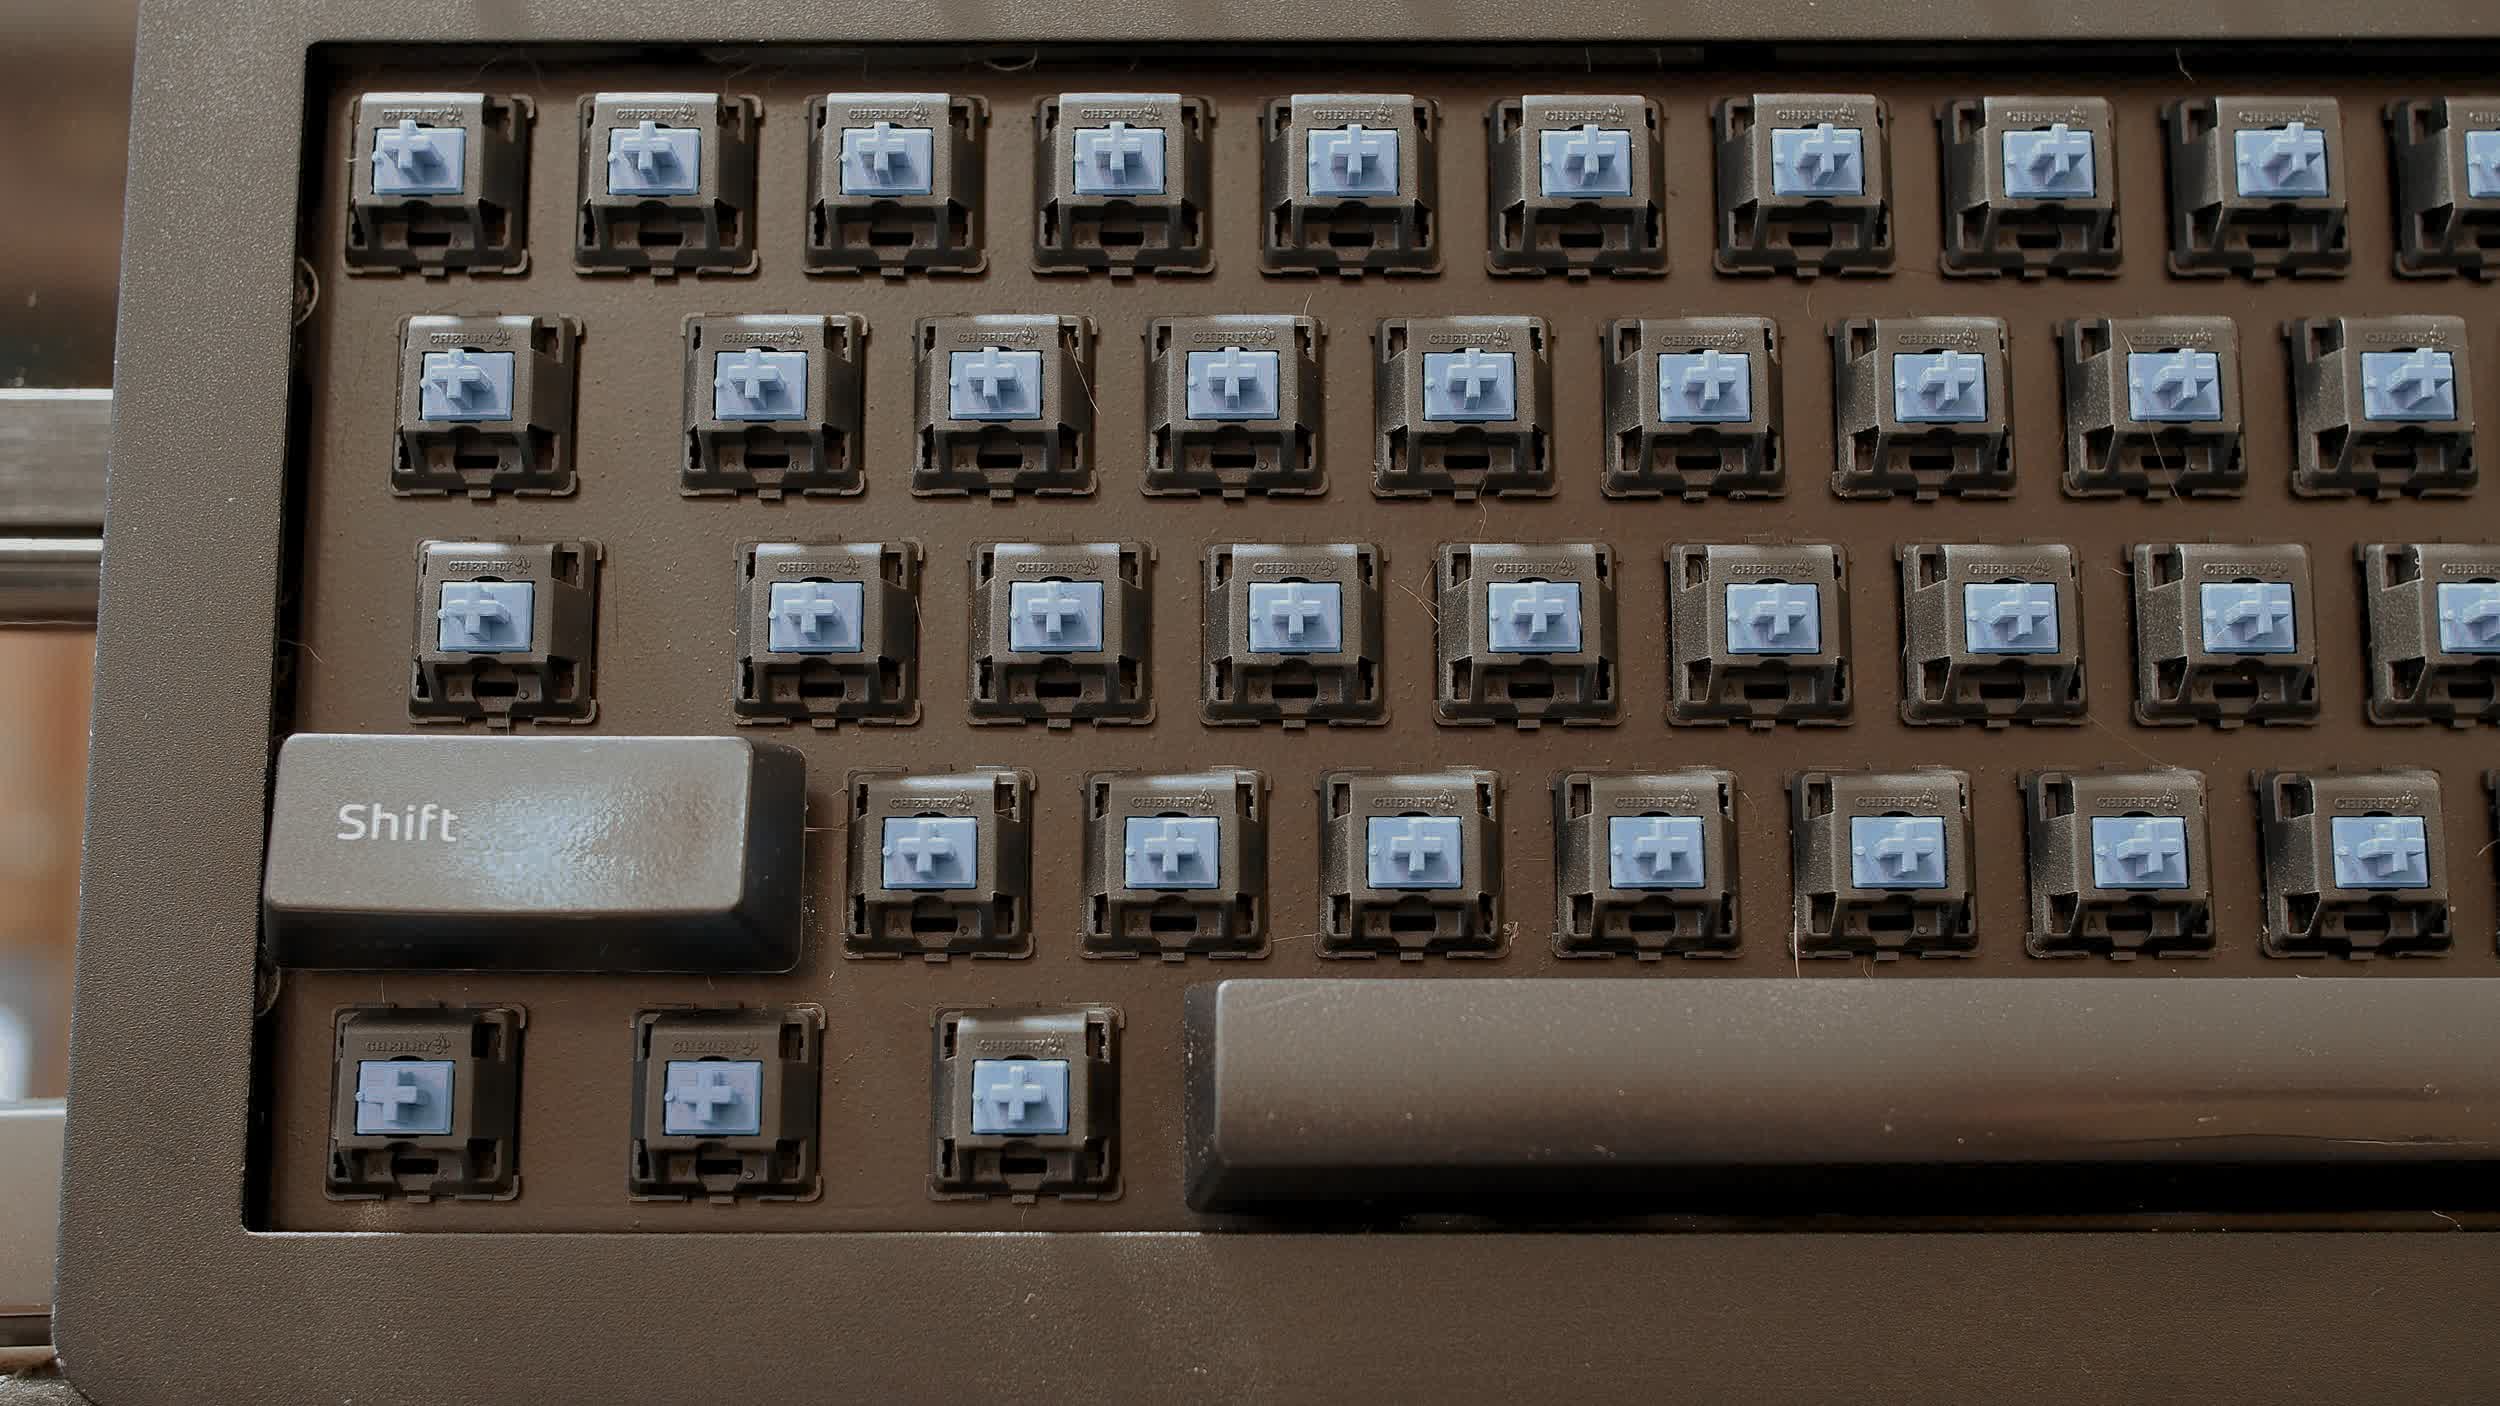 Cara Membersihkan Keyboard